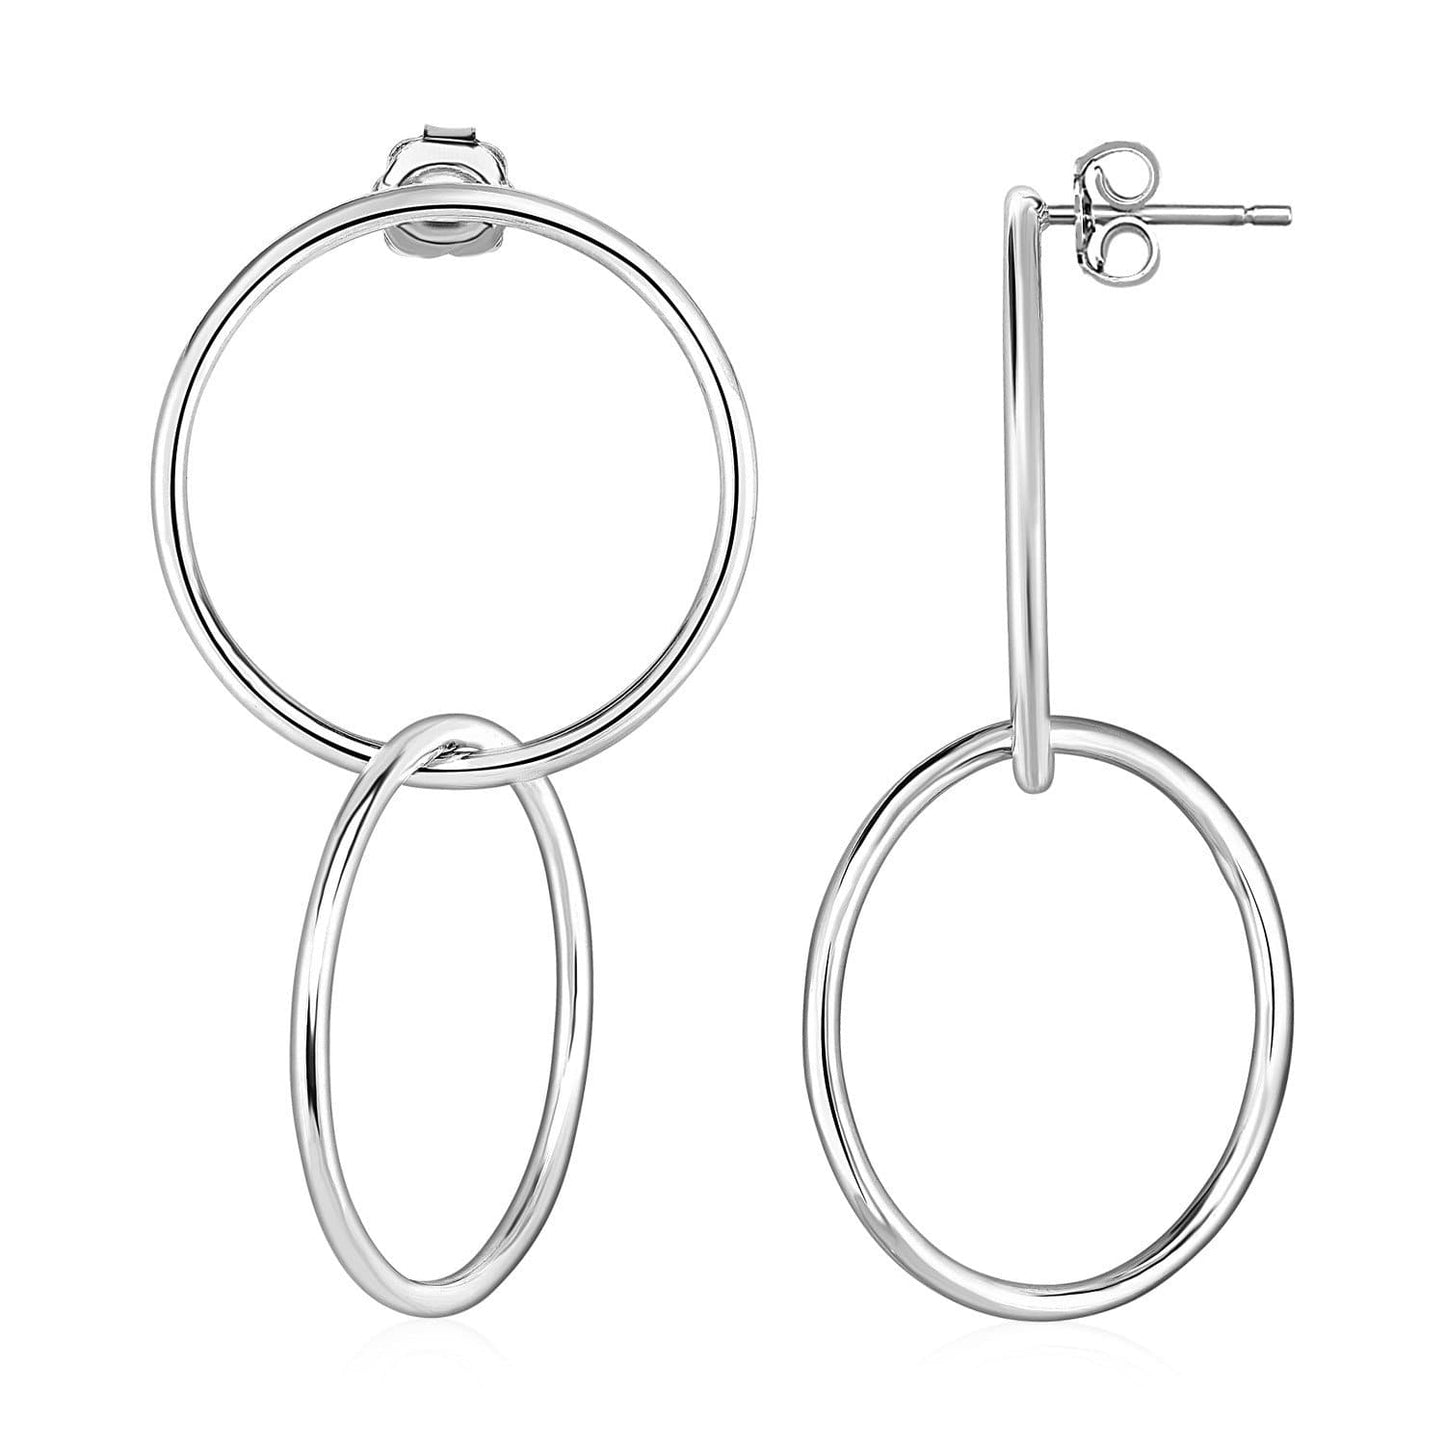 Interlocking Polished Ring Earrings in Sterling Silver